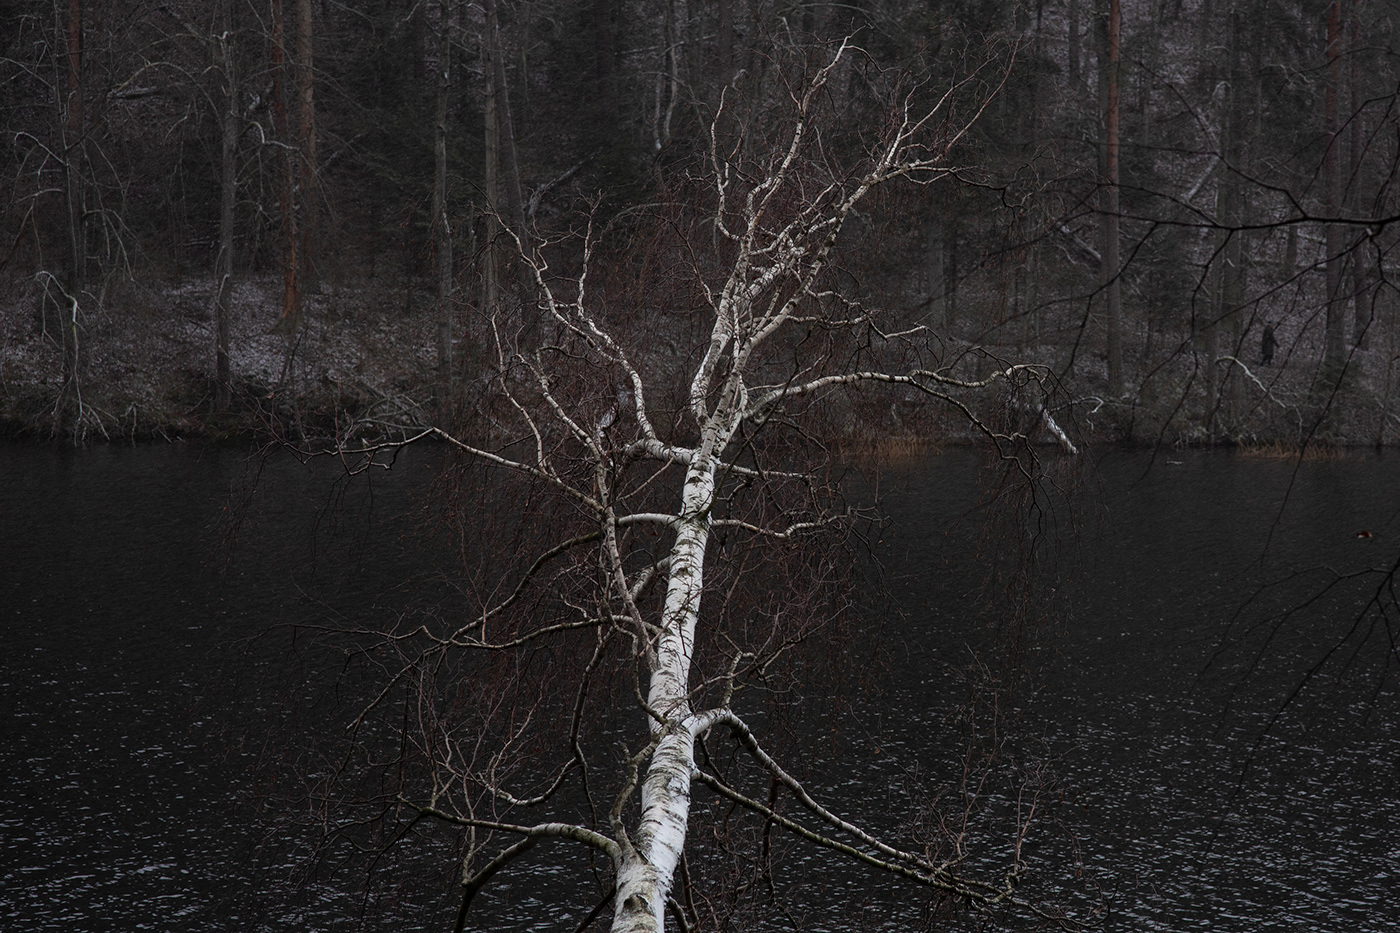 forest lietuva lithuania Mindaugas Buivydas Nature Photography  winter woods